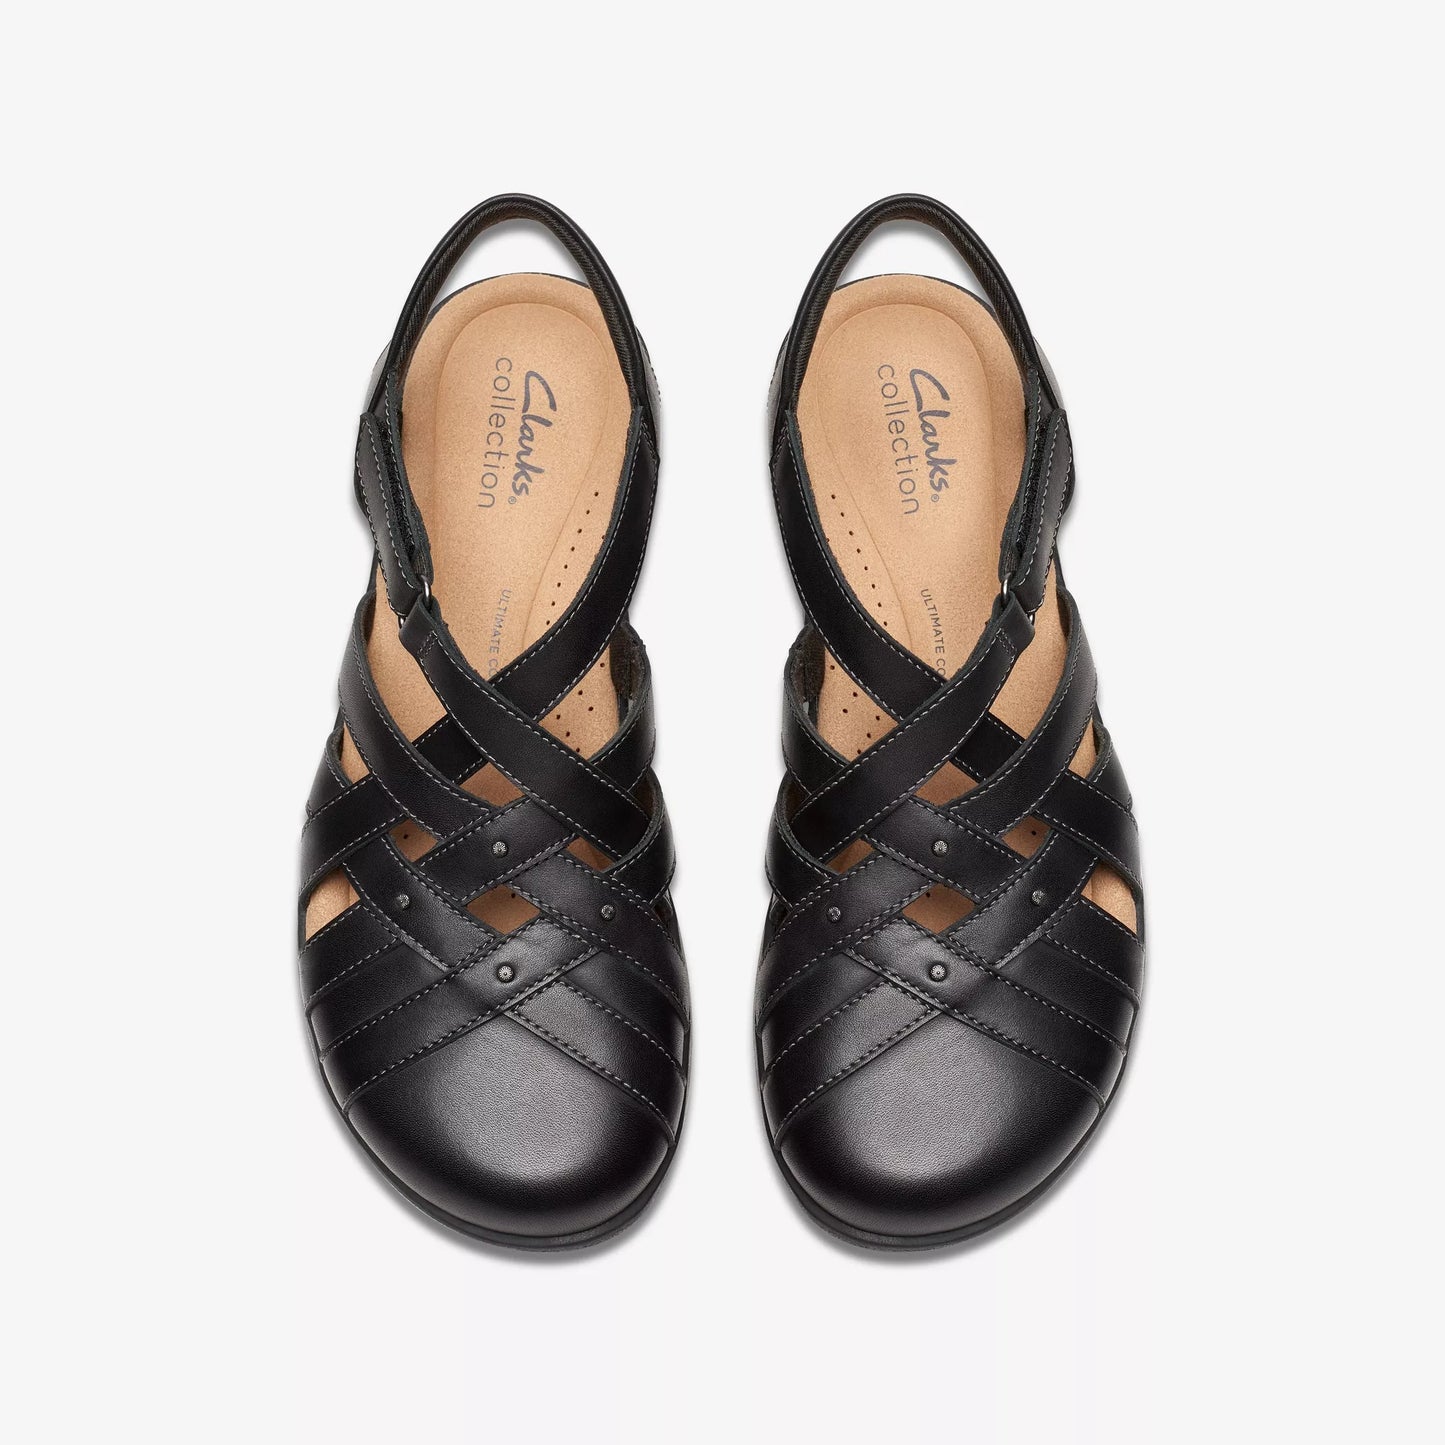 Clarks Women's Elizabelle Sea Sandals - Black Leather